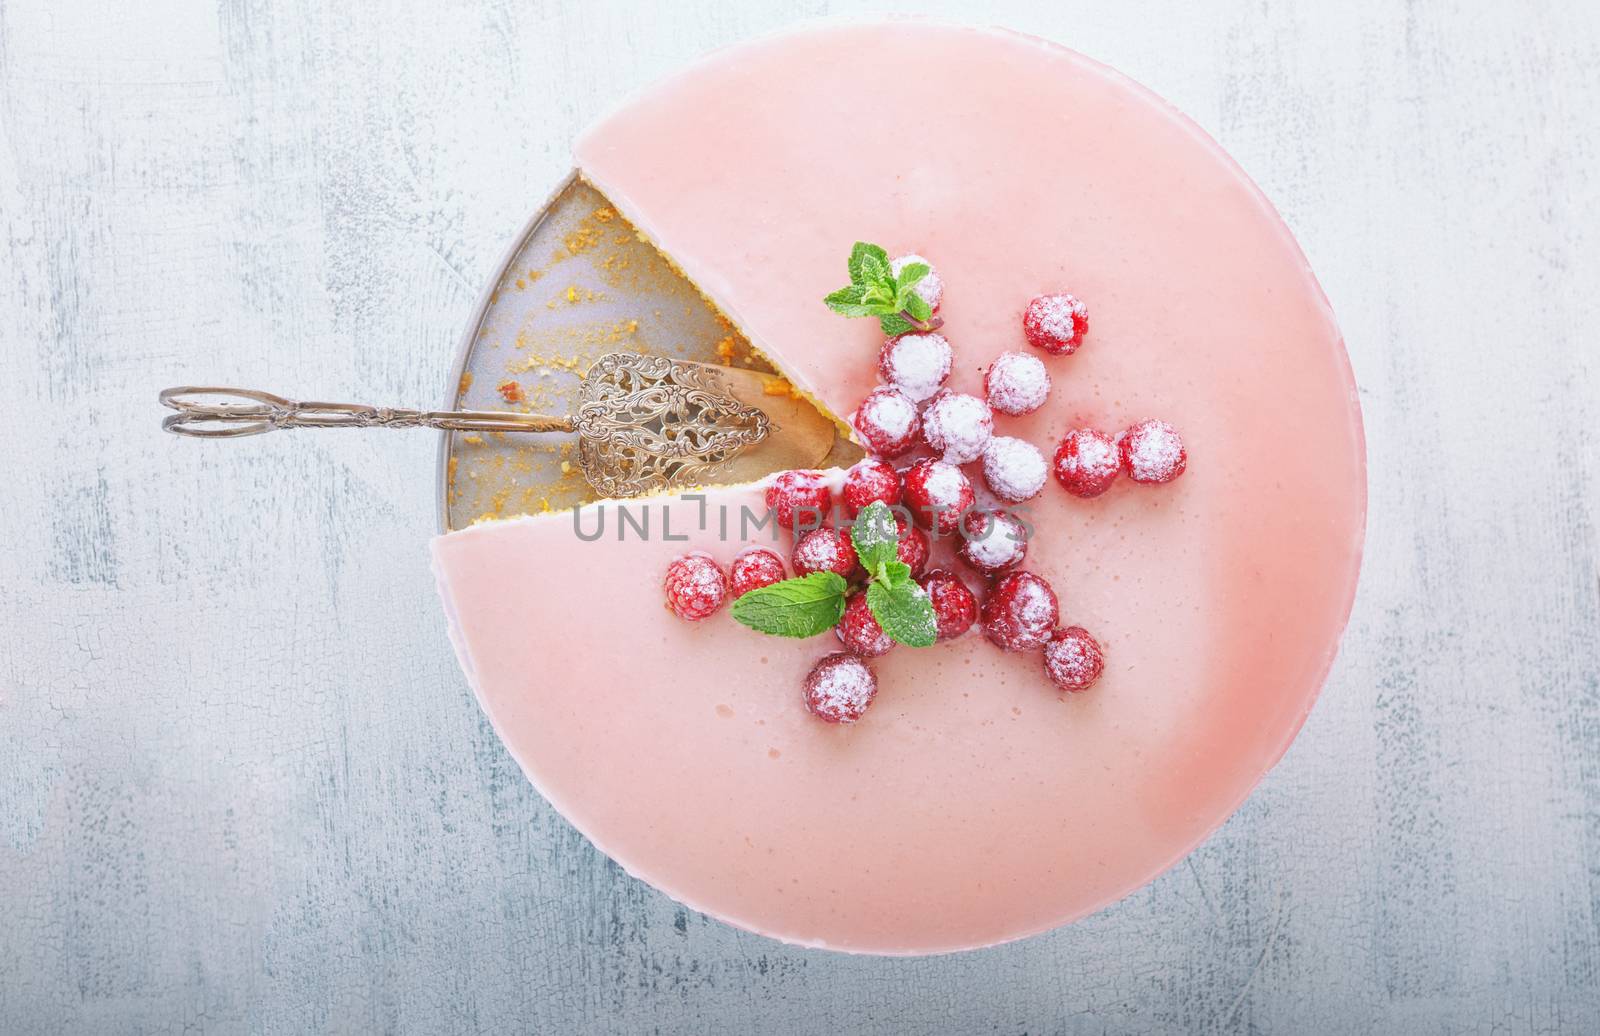 Raspberry yogurt cake on a wooden surface